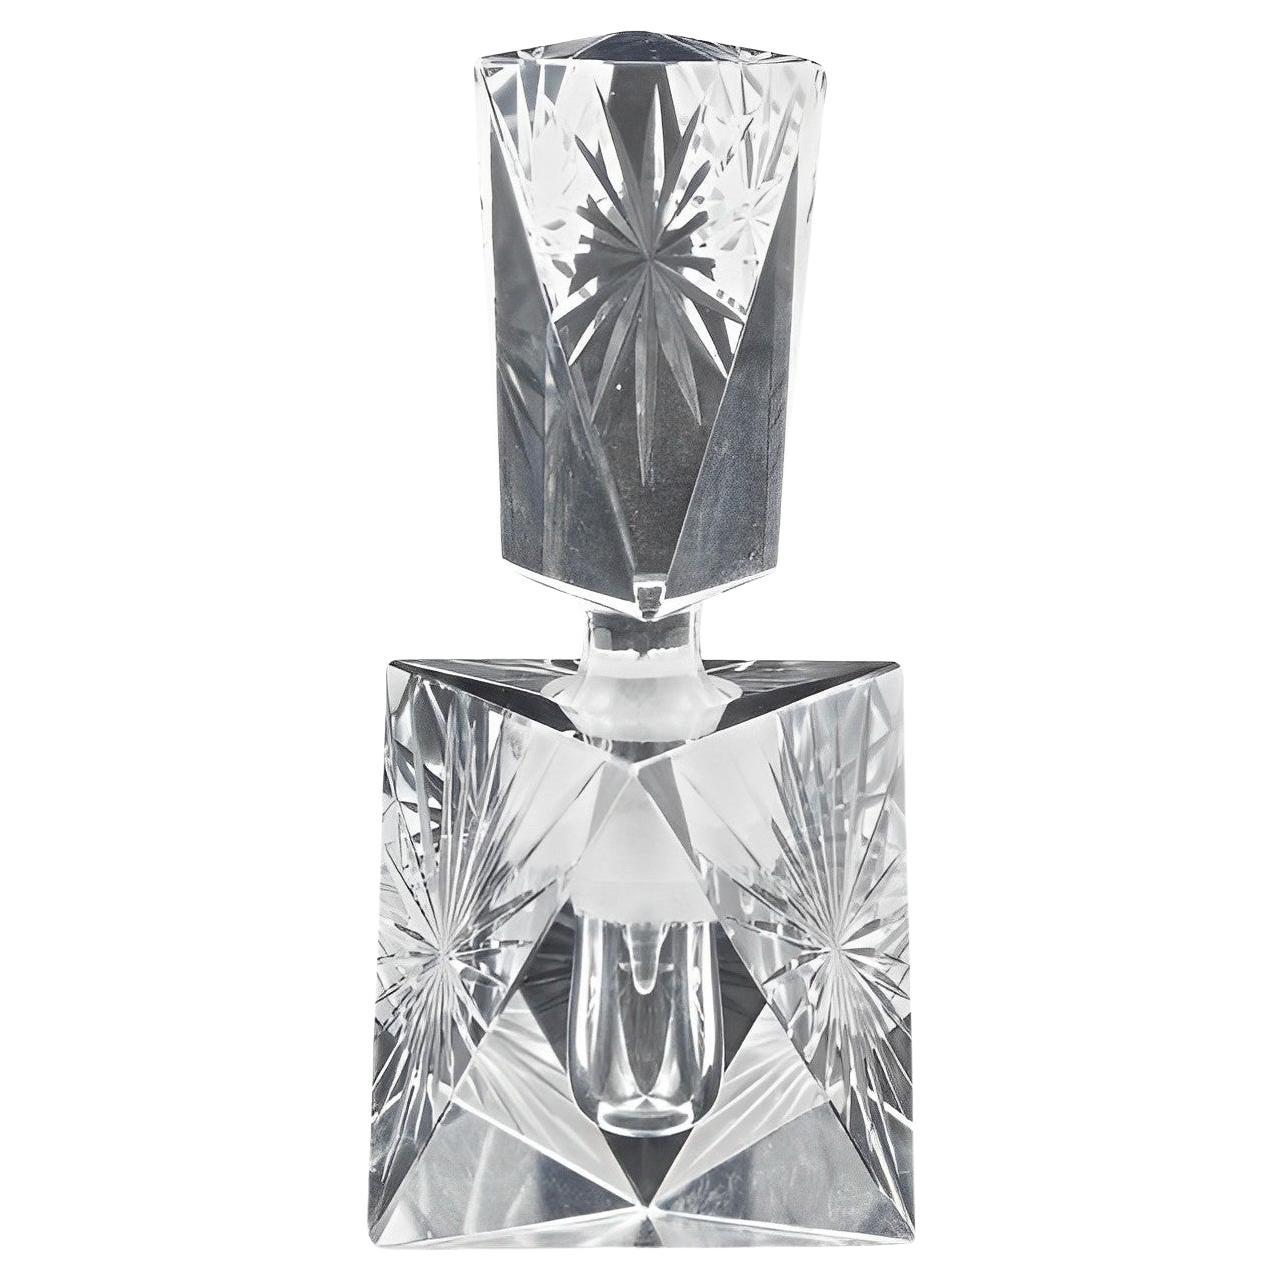 Cut Lead Crystal Perfume Bottle with a Star Design circa 1950s